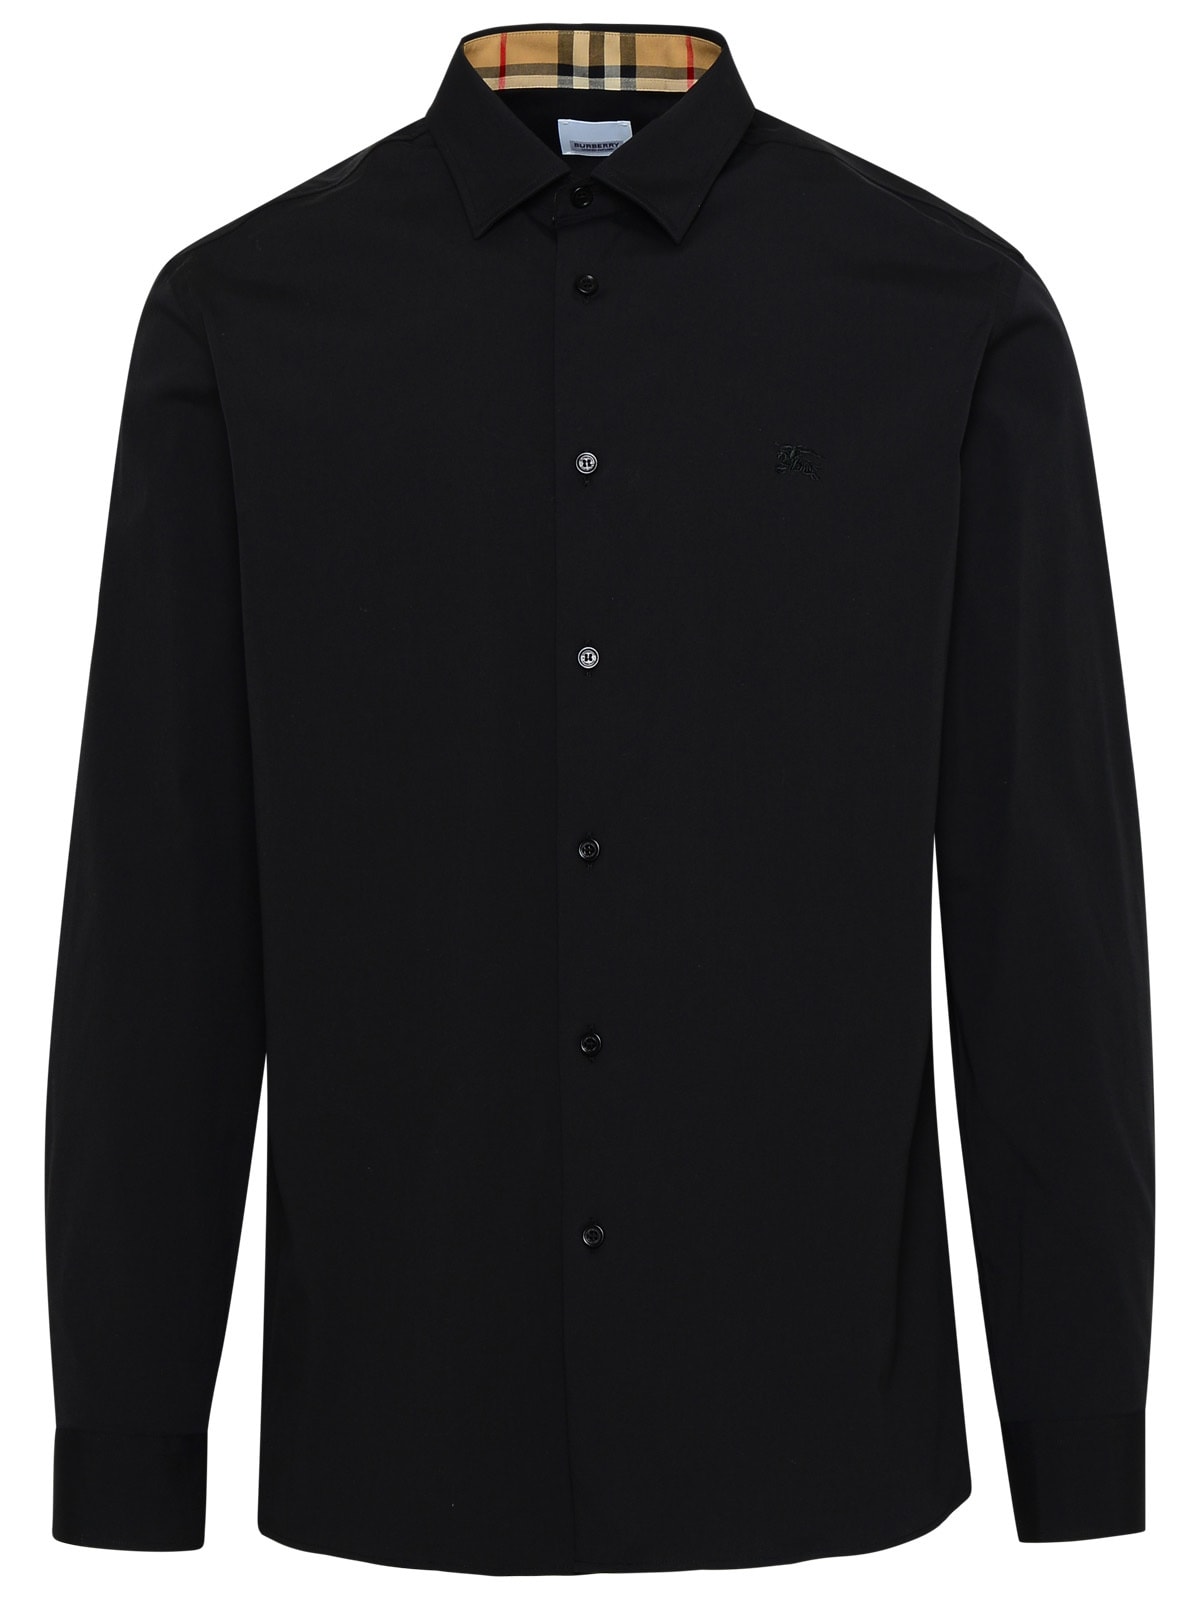 Sherfield Shirt In Black Cotton